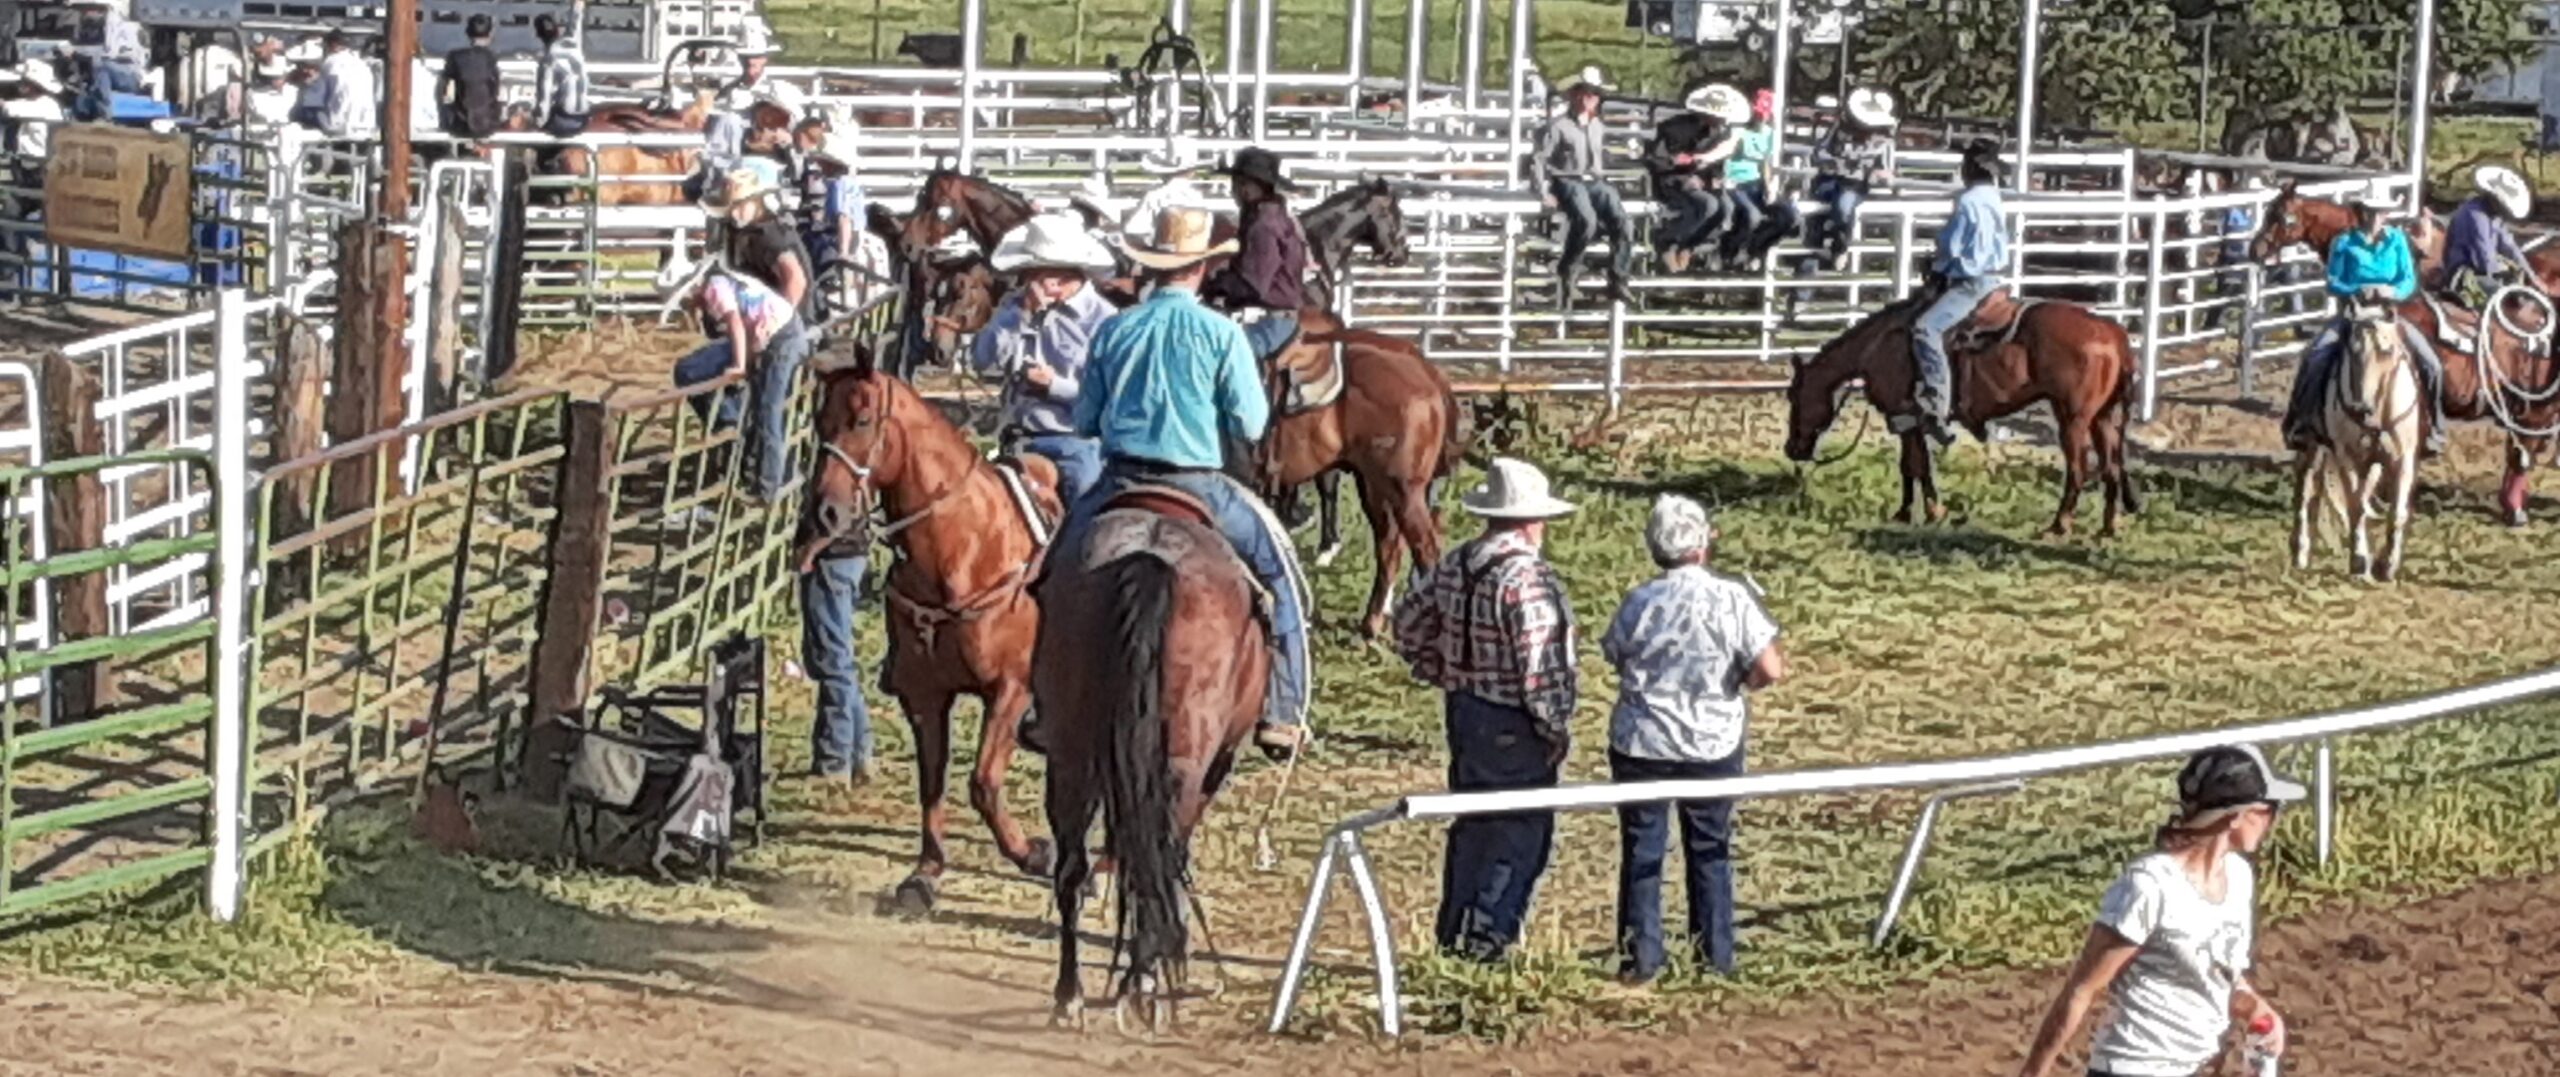 Riders at chutes, County Rodeo 2021